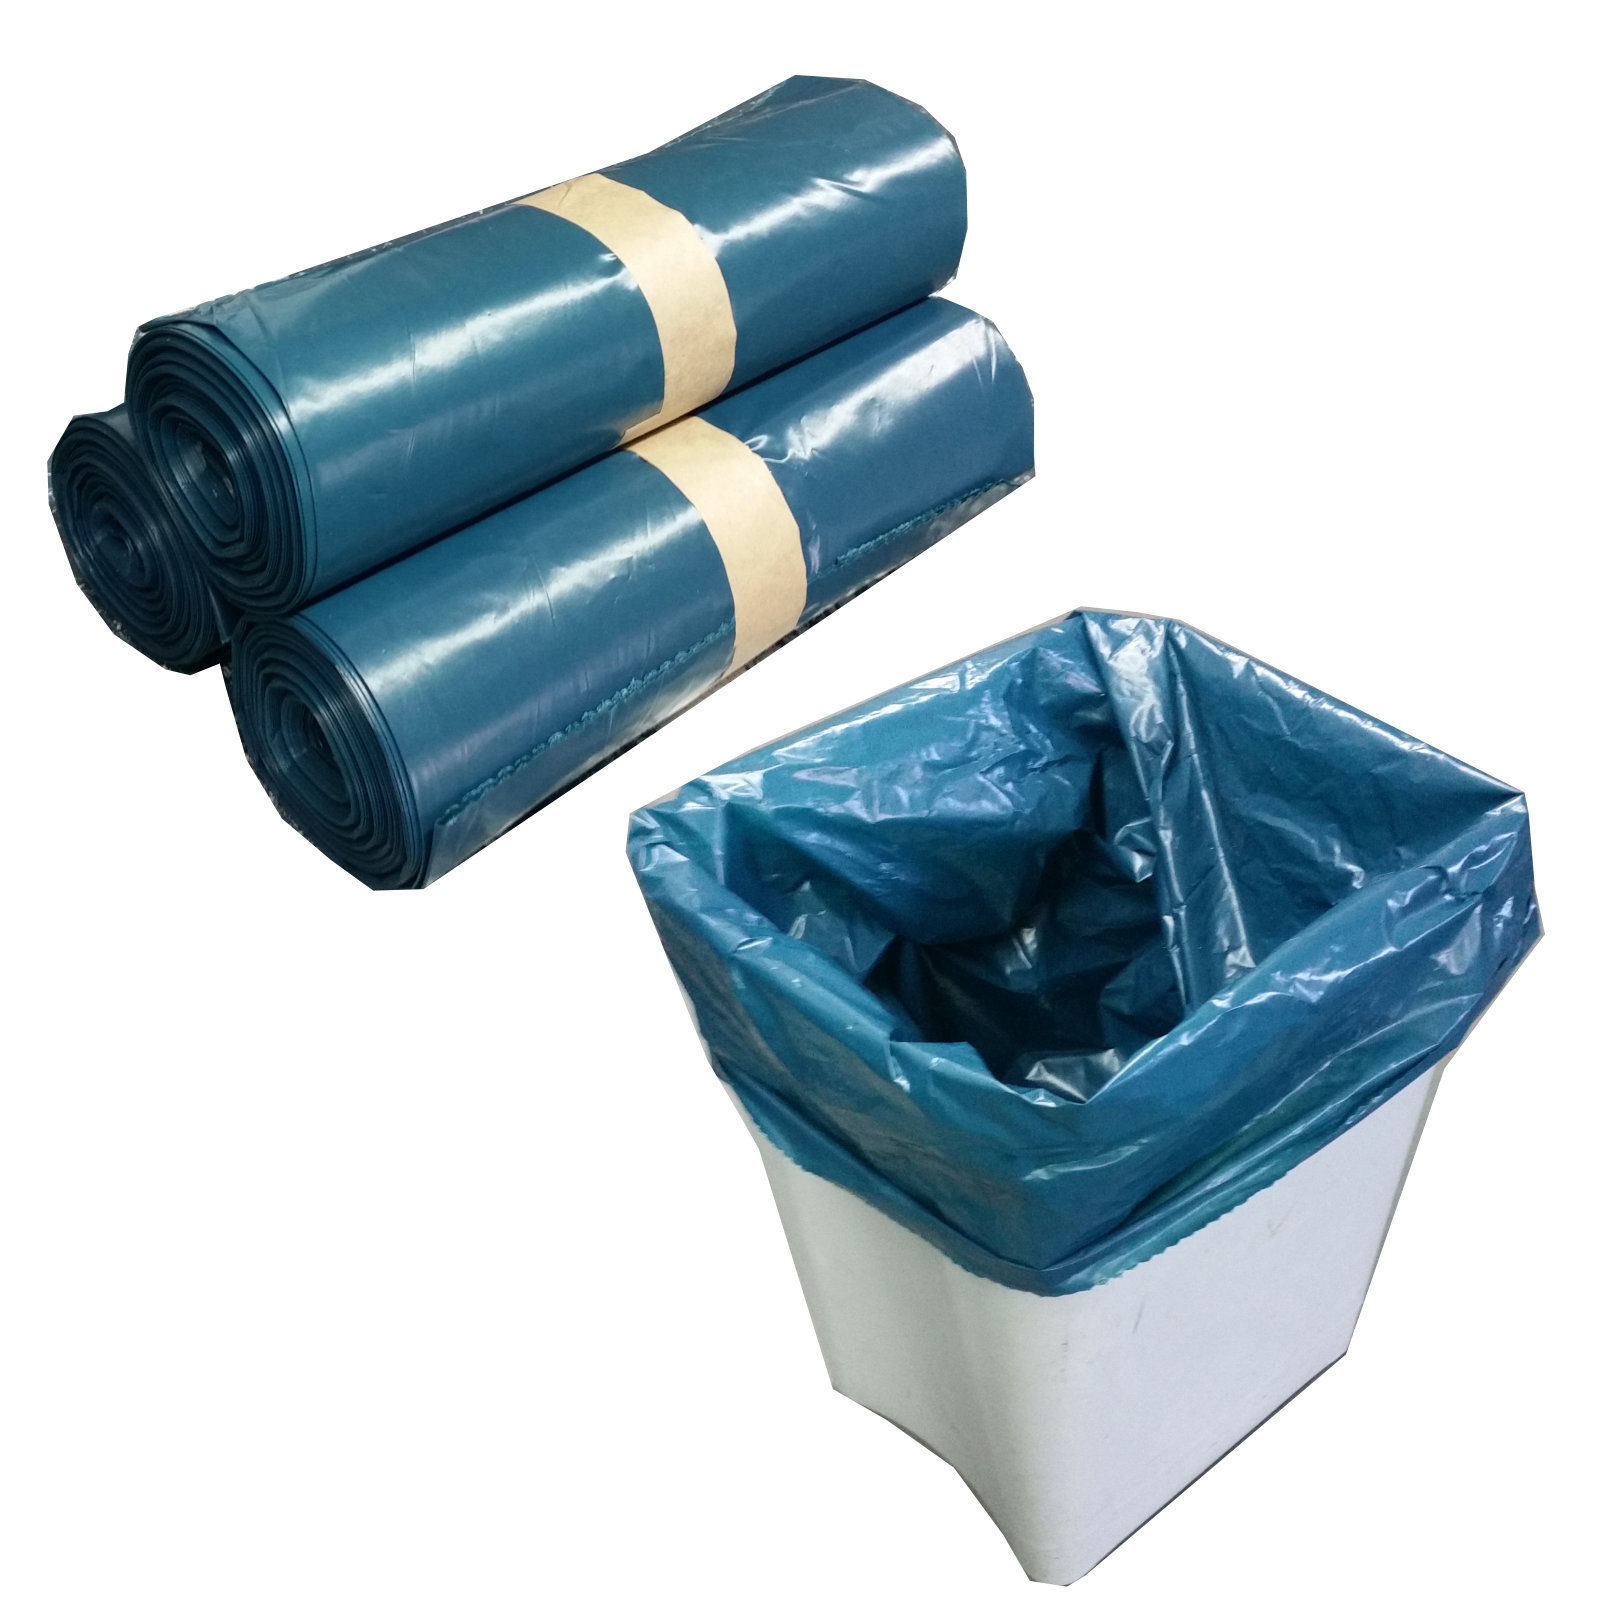 150 x 78my Abfallbeutel 120 Liter Beutel Säcke Abfall Müll-Sack Blau 